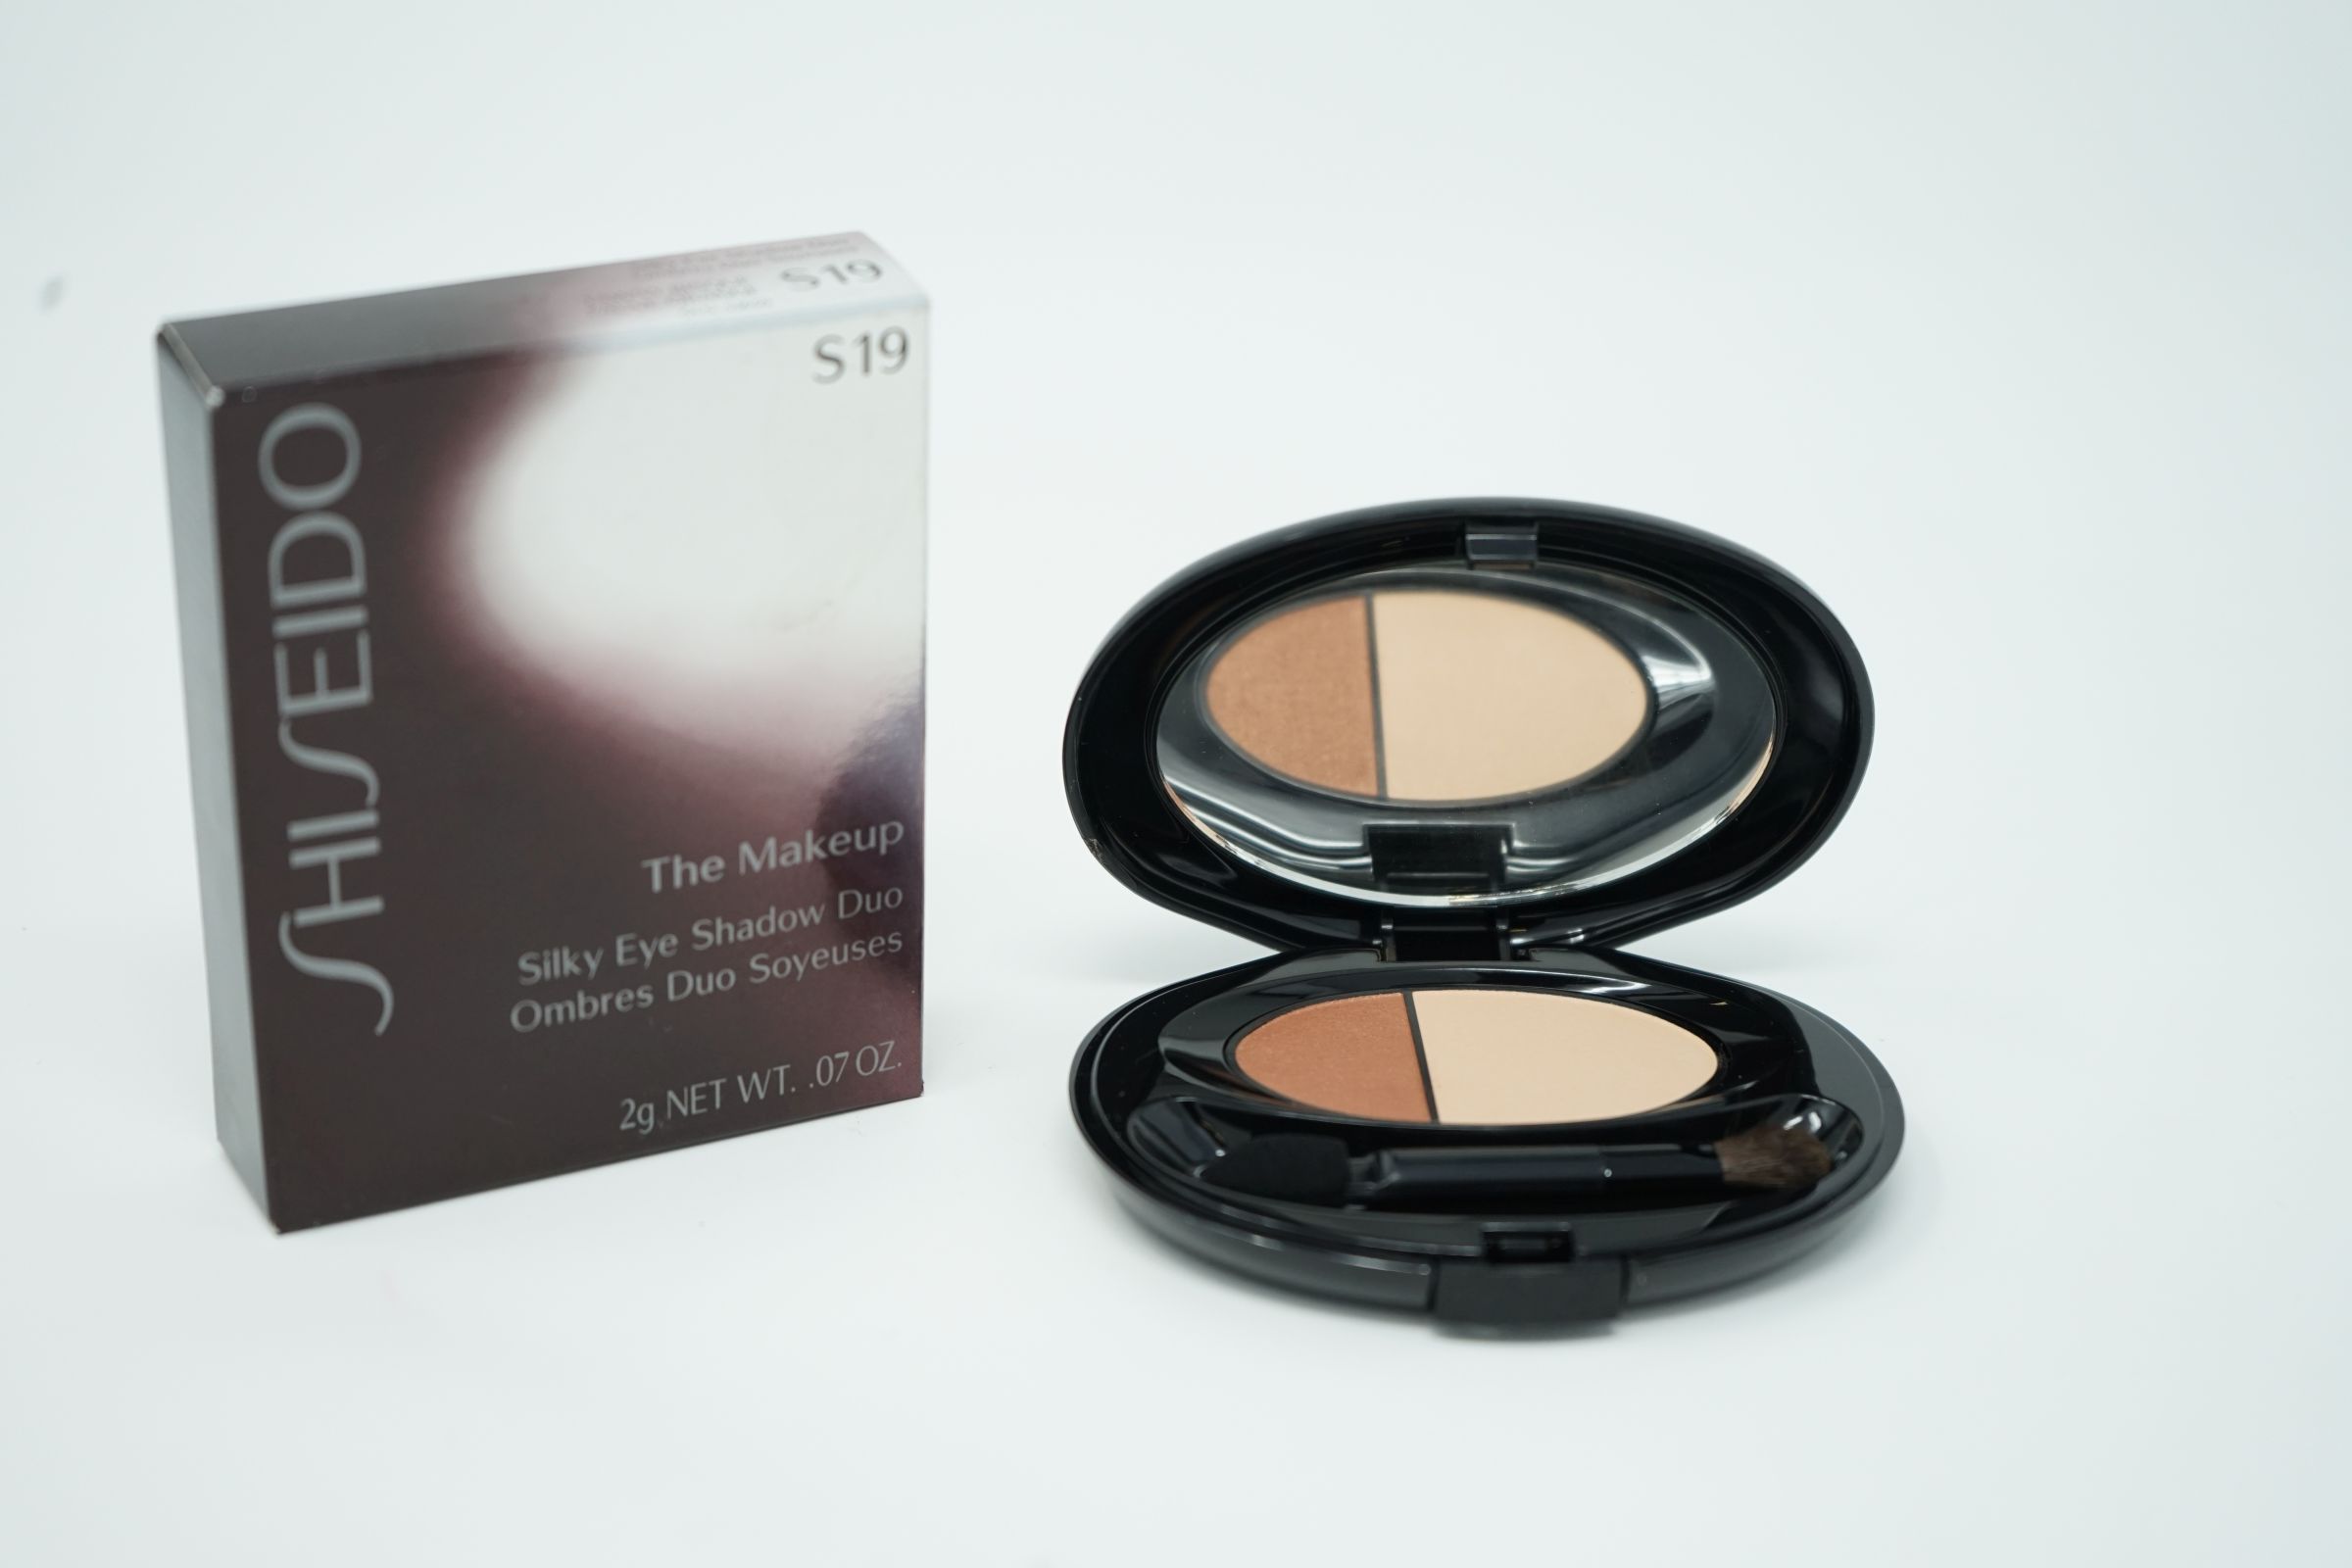 Shiseido The Makeup Silky Eye Shadow Duo S19 Tawny Bisque